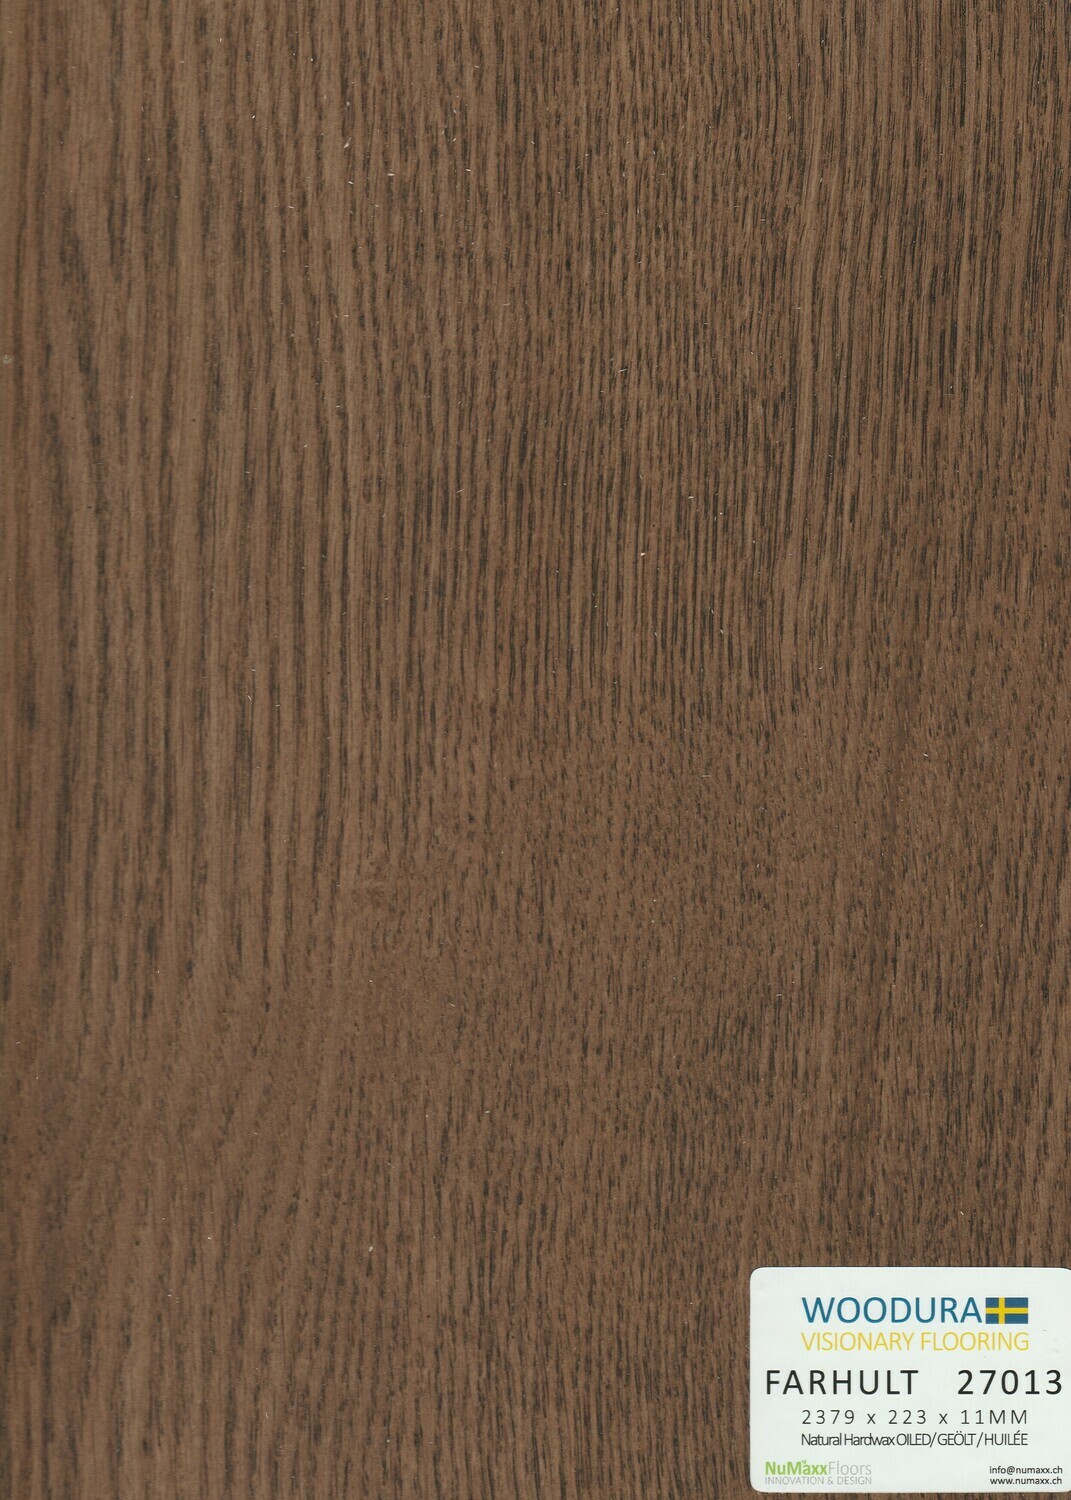 Holzboden Woodura Farhult 27013 pro 1m² Stärke 11mm x 223mm x 2379mm Nutzschicht 0.6mm